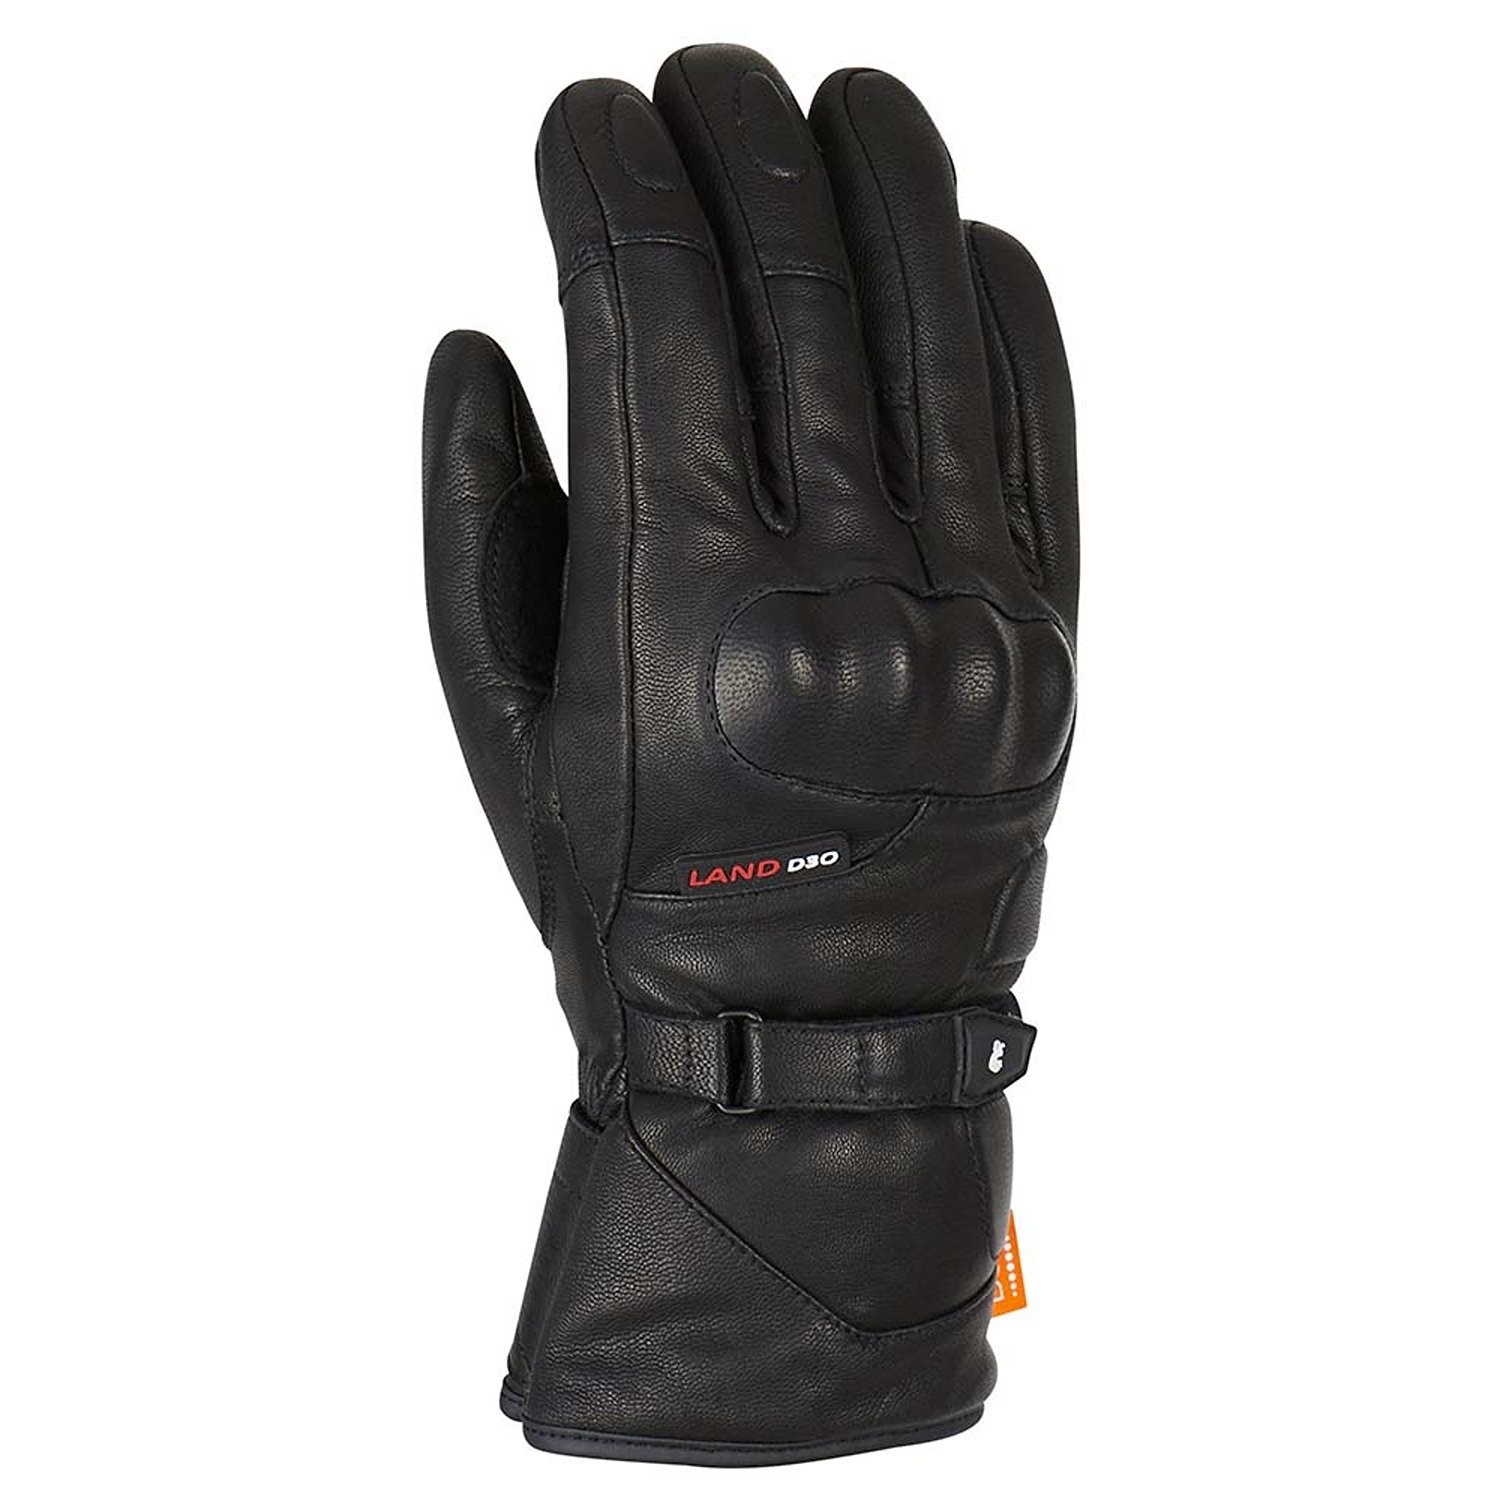 Image of Furygan Land DK D30 Gloves Black Taille S